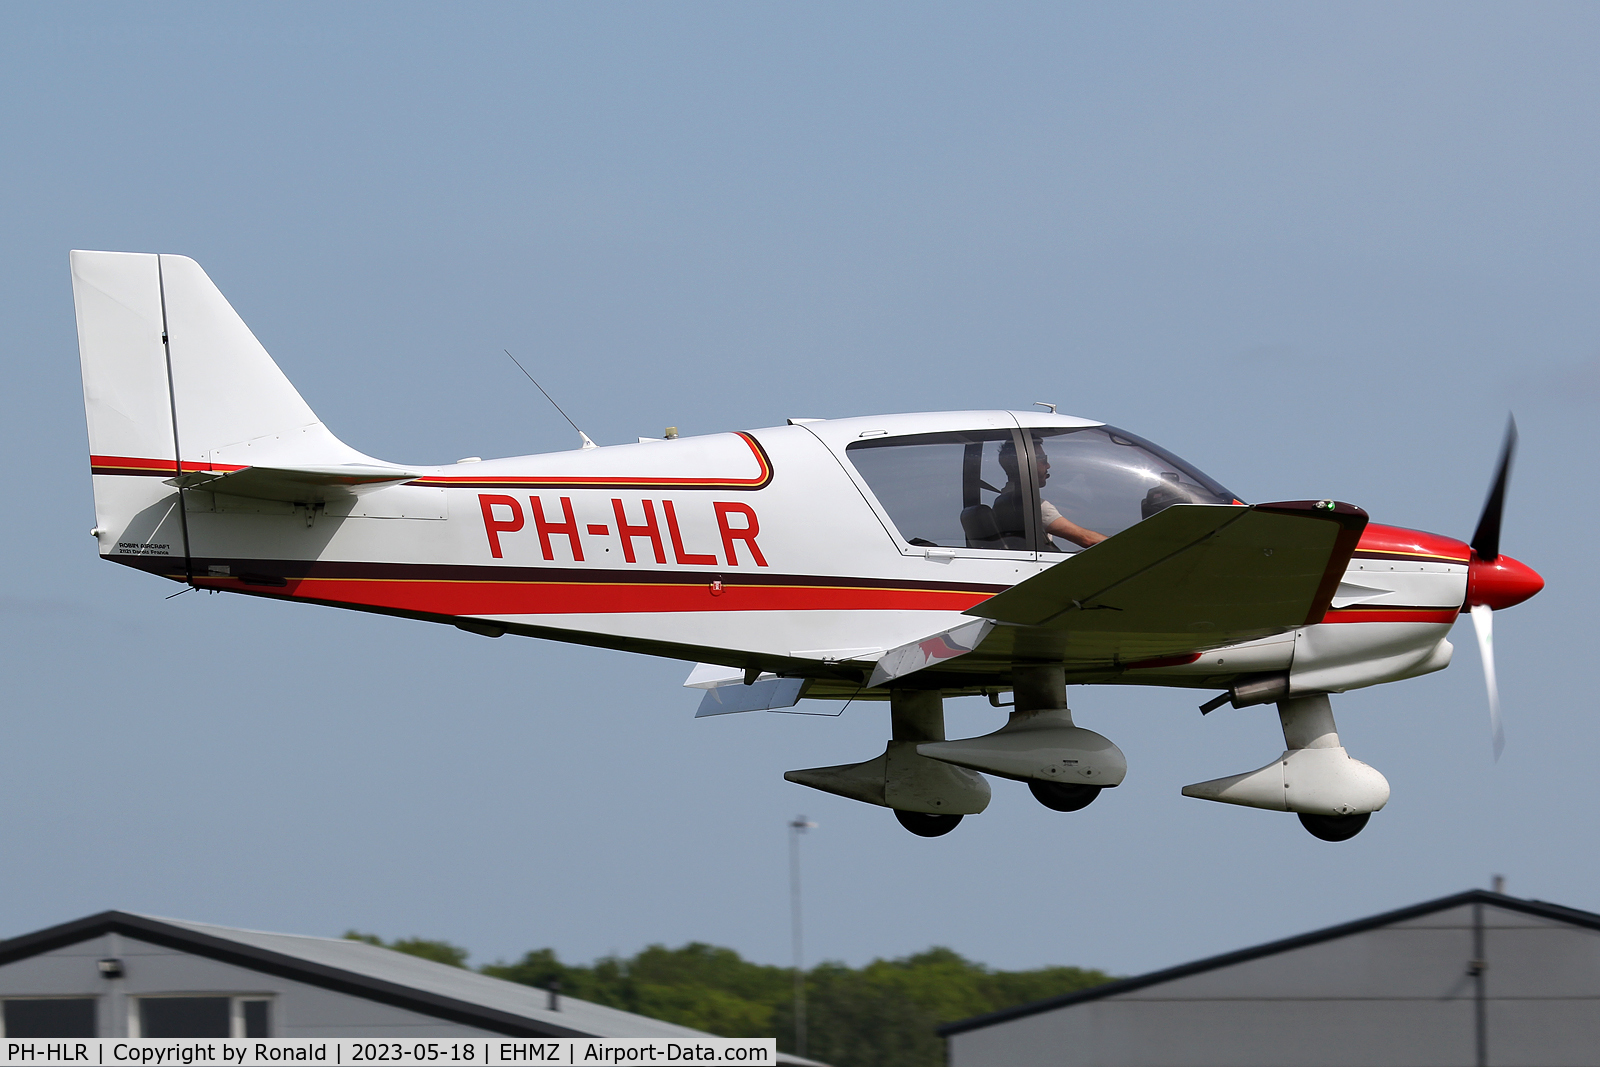 PH-HLR, 2006 Robin DR-400-140B Major C/N 2595, at ehmz